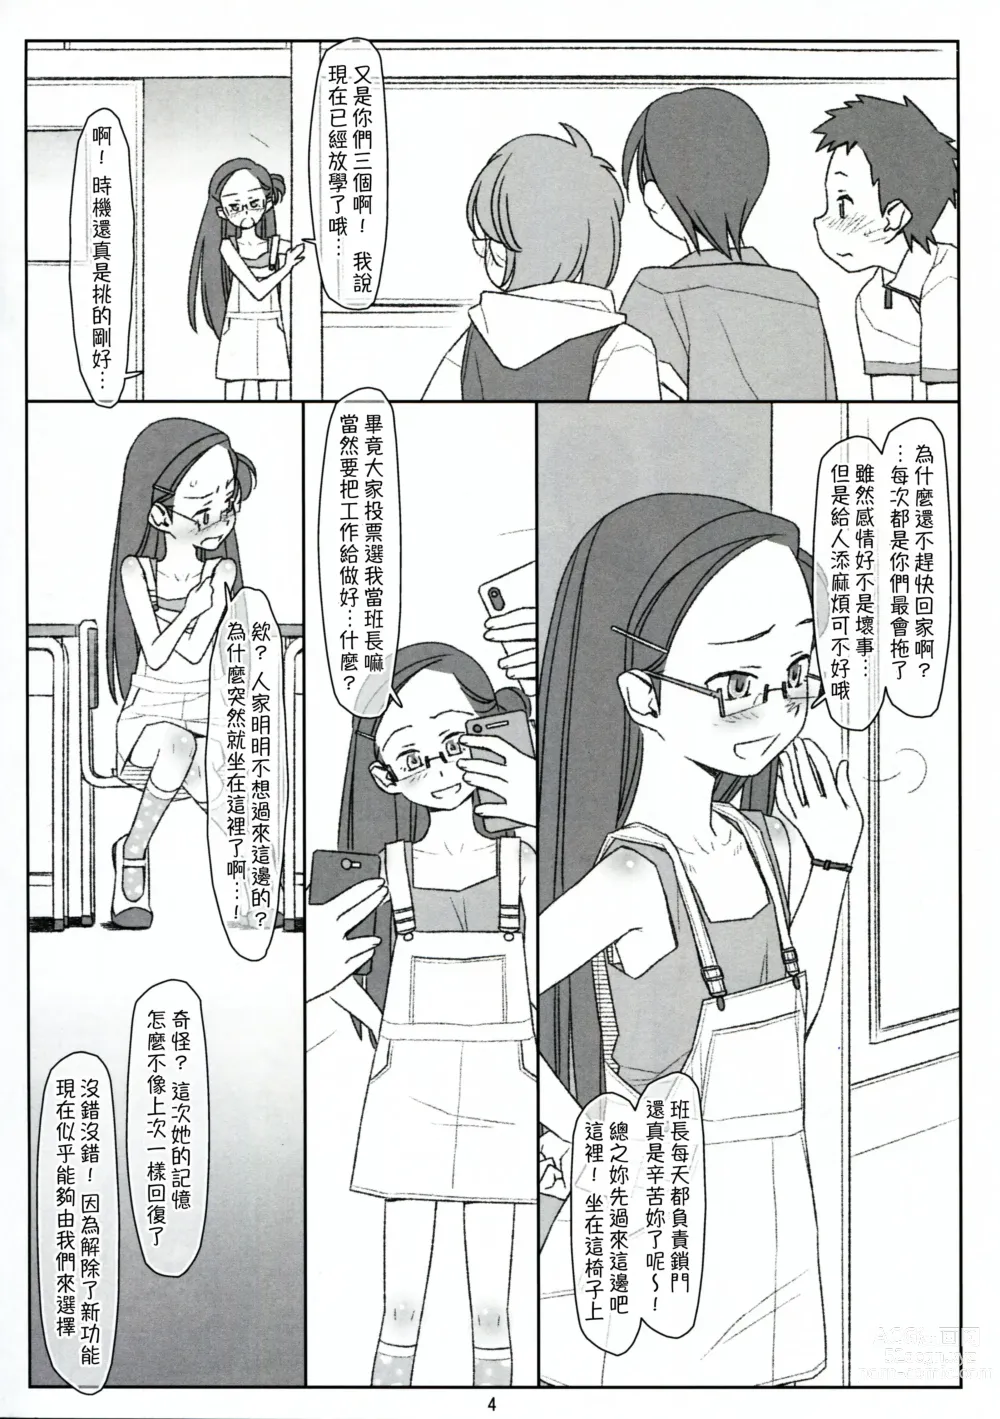 Page 4 of doujinshi Bokutachi no Super App ③ + ④